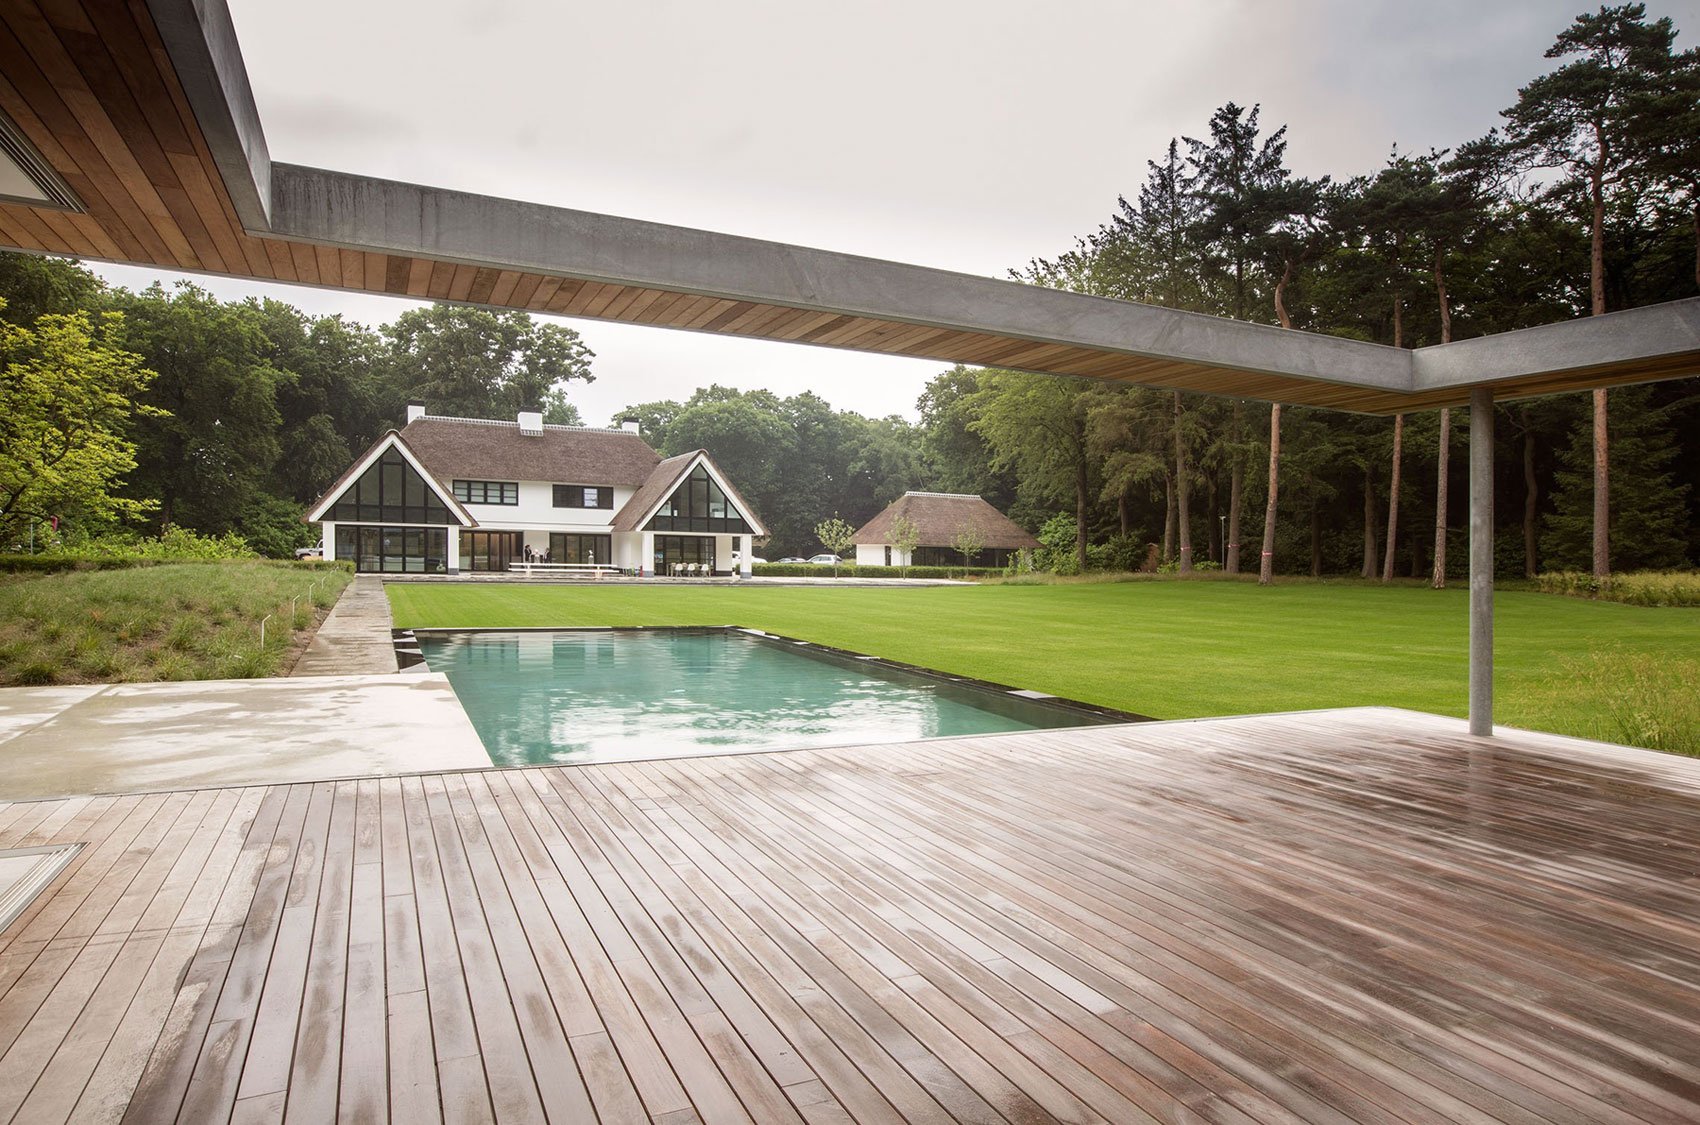 Modern Huizen Country House Located in a Quiet Rural Setting by De Brouwer Binnenwerk-03